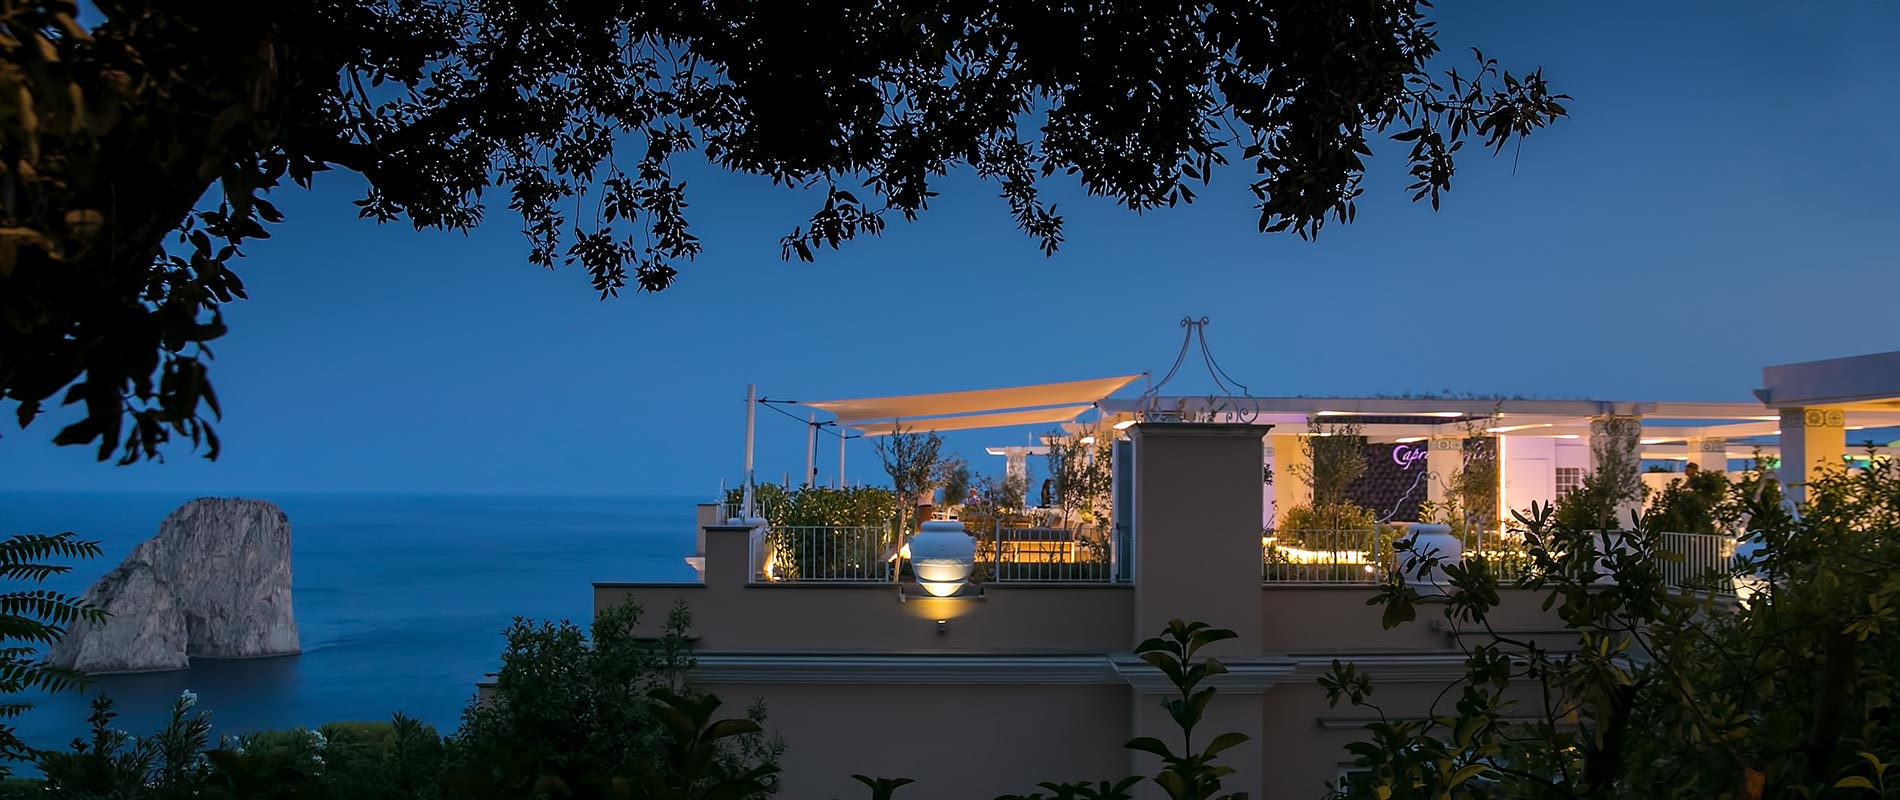 Capri RoofTop - Lounge Bar